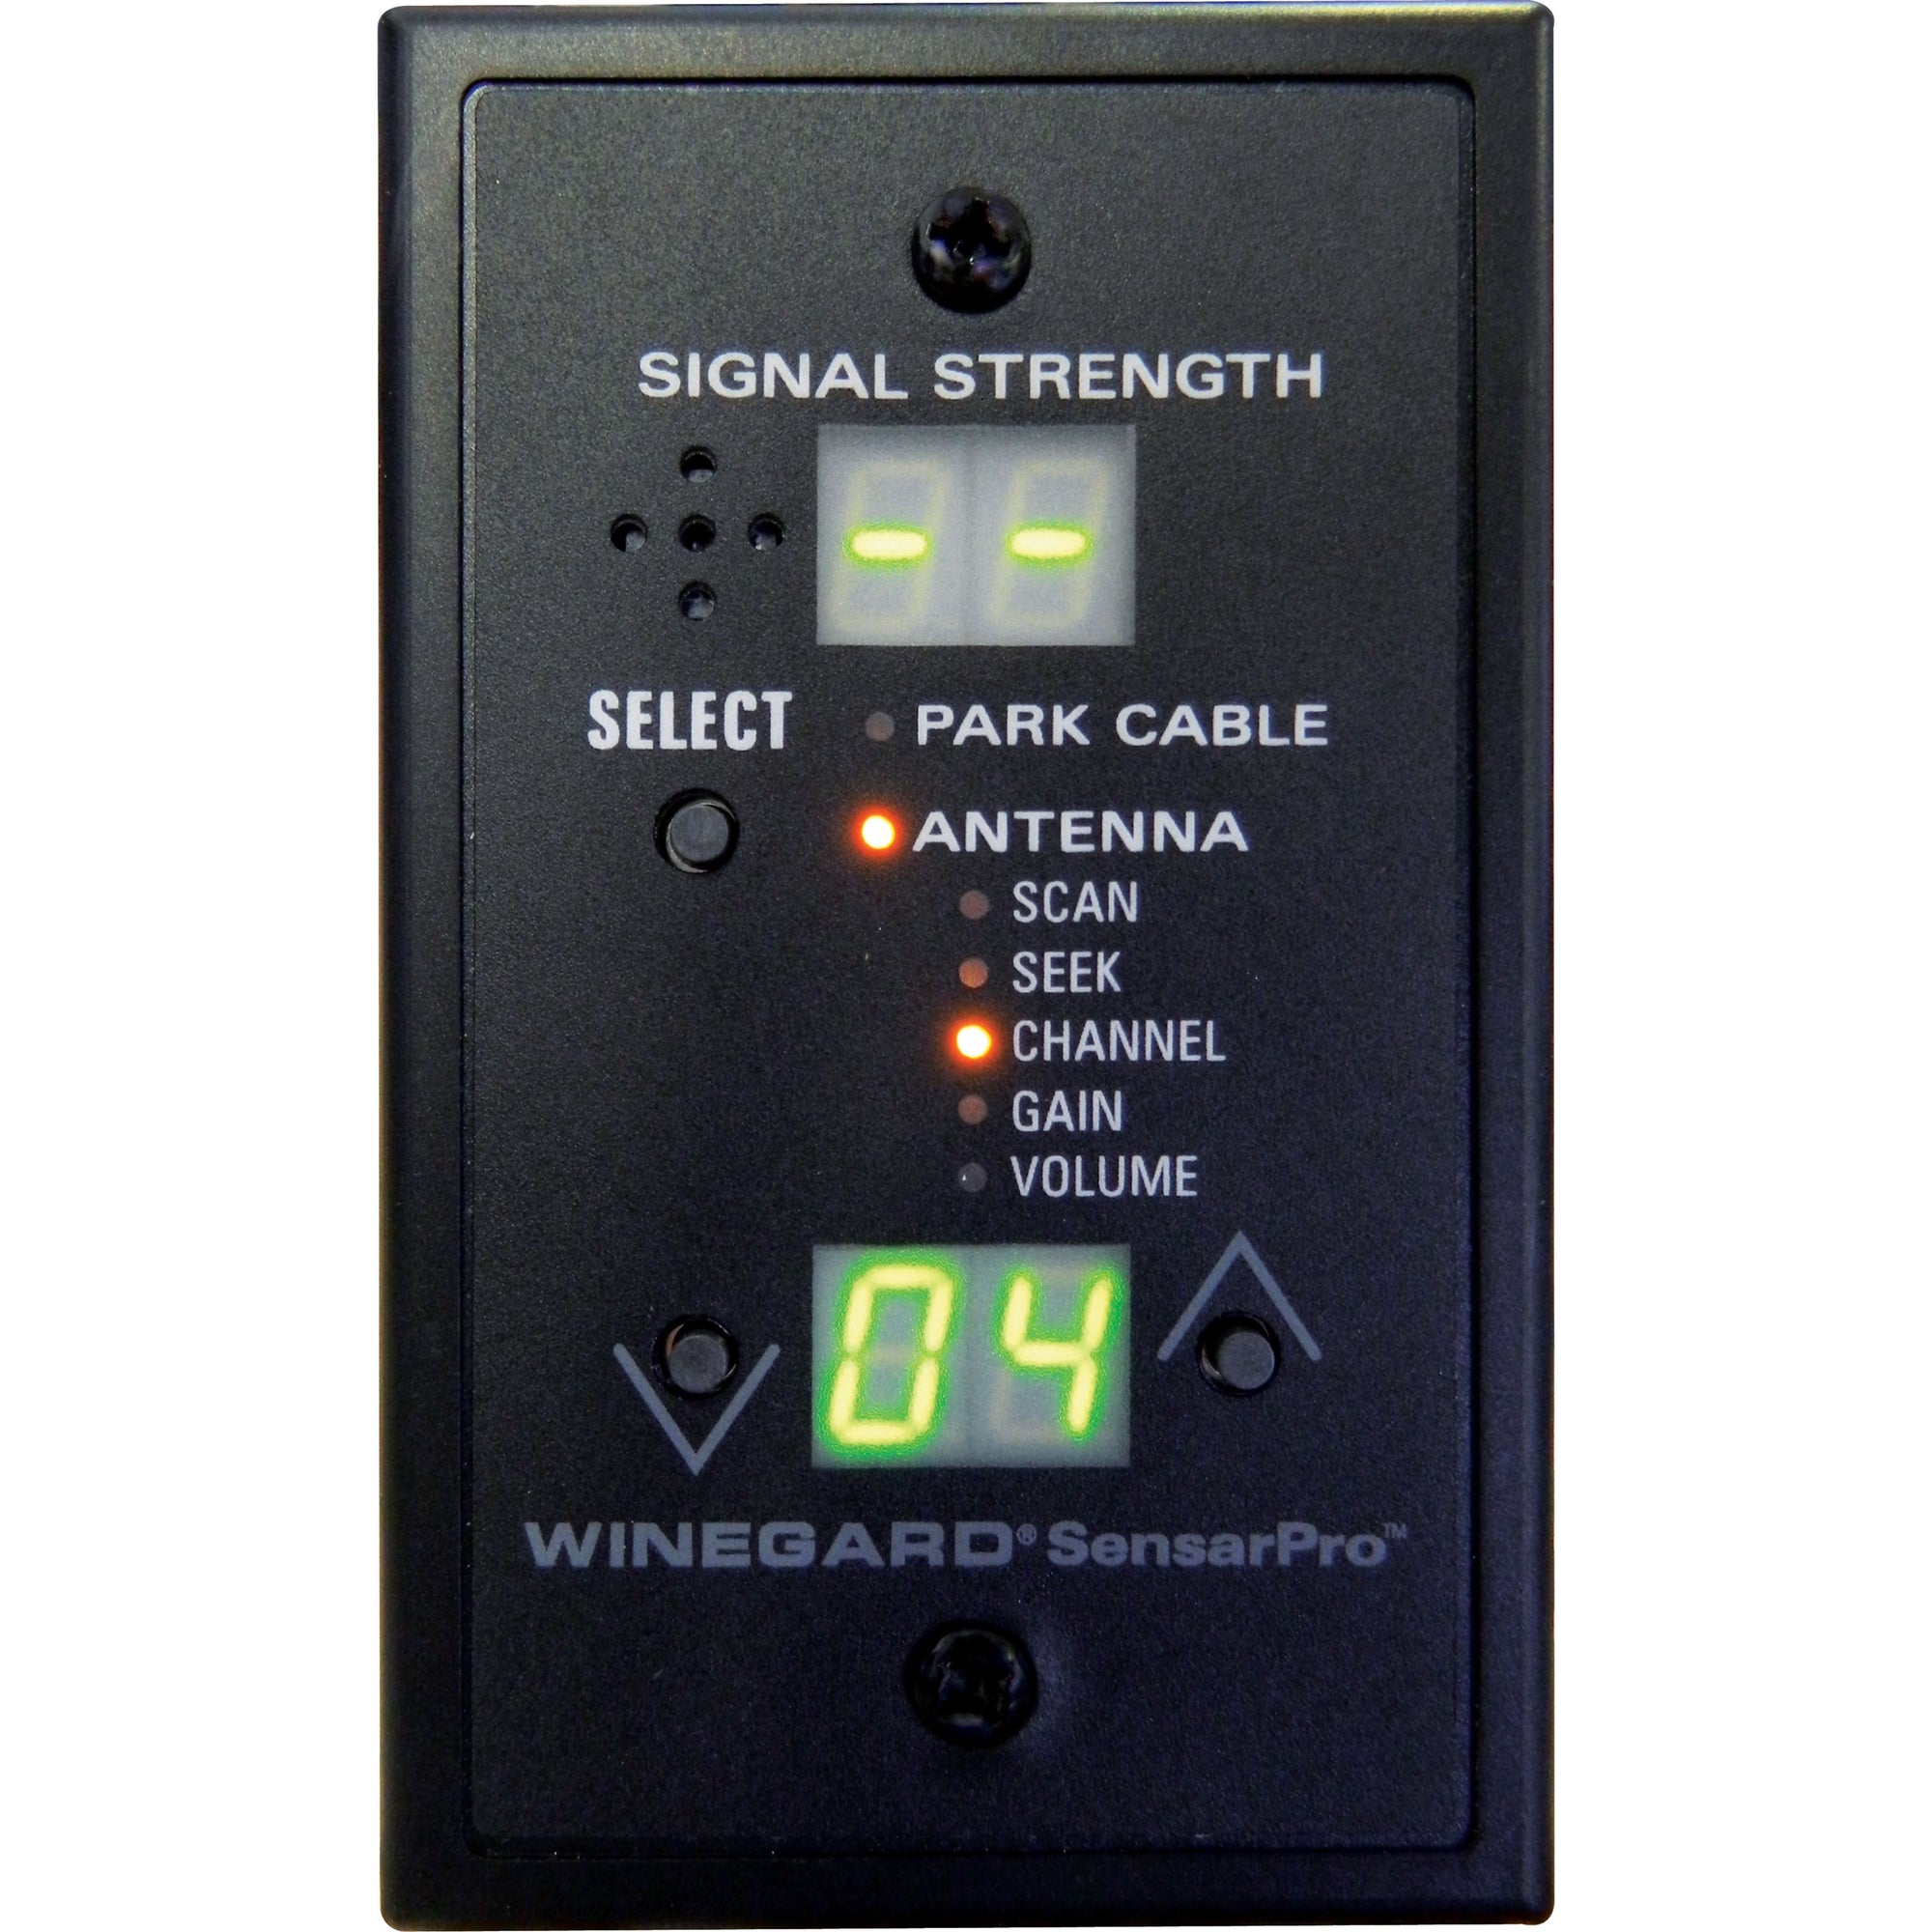 Winegard RFL-332 Sensar Pro Signal Meter - Black